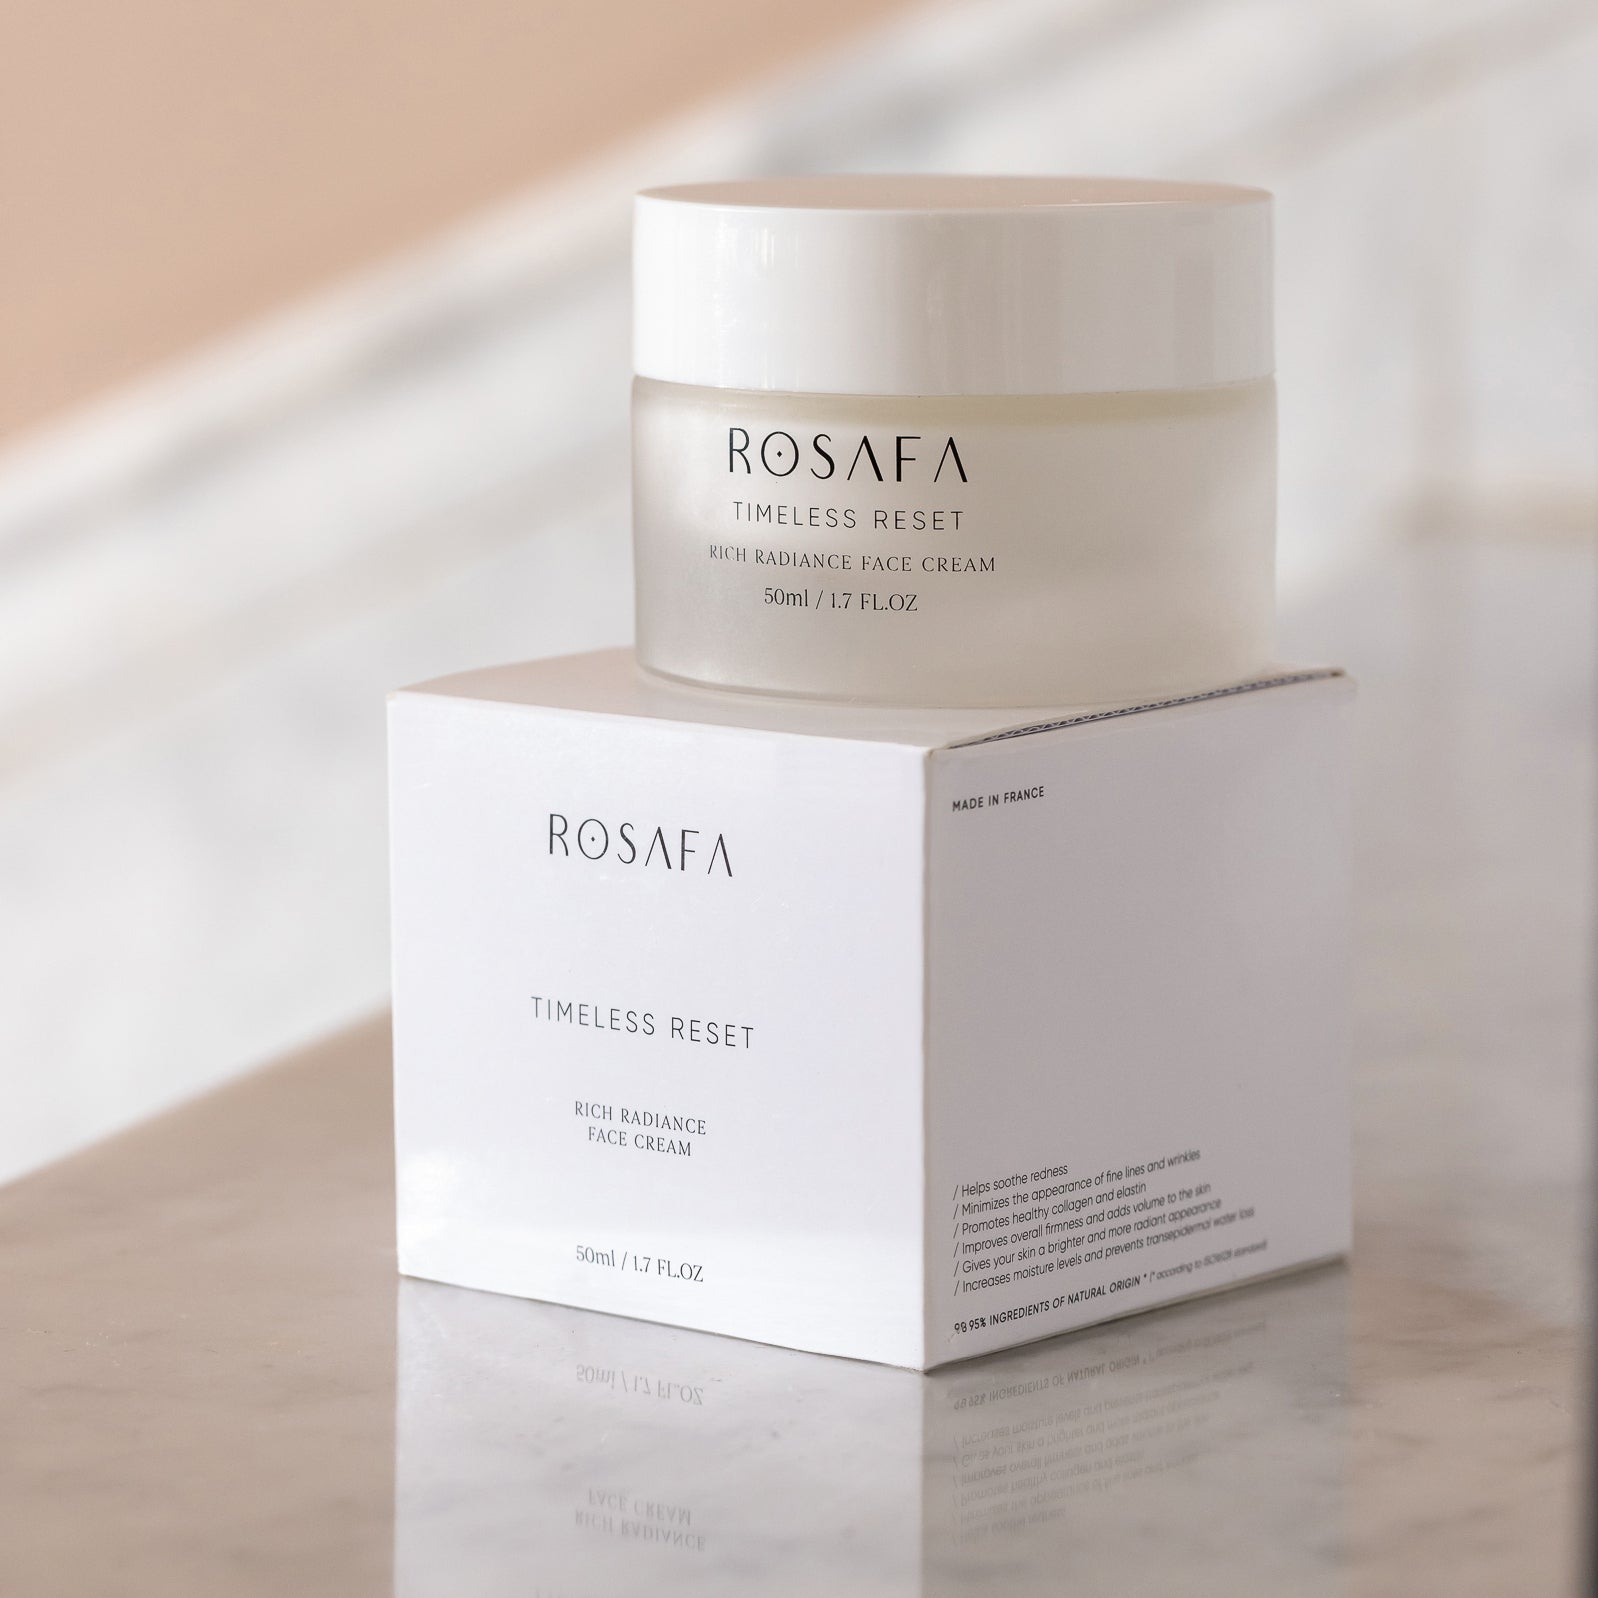 Rosafa skincare timeless reset rich radiance face cream